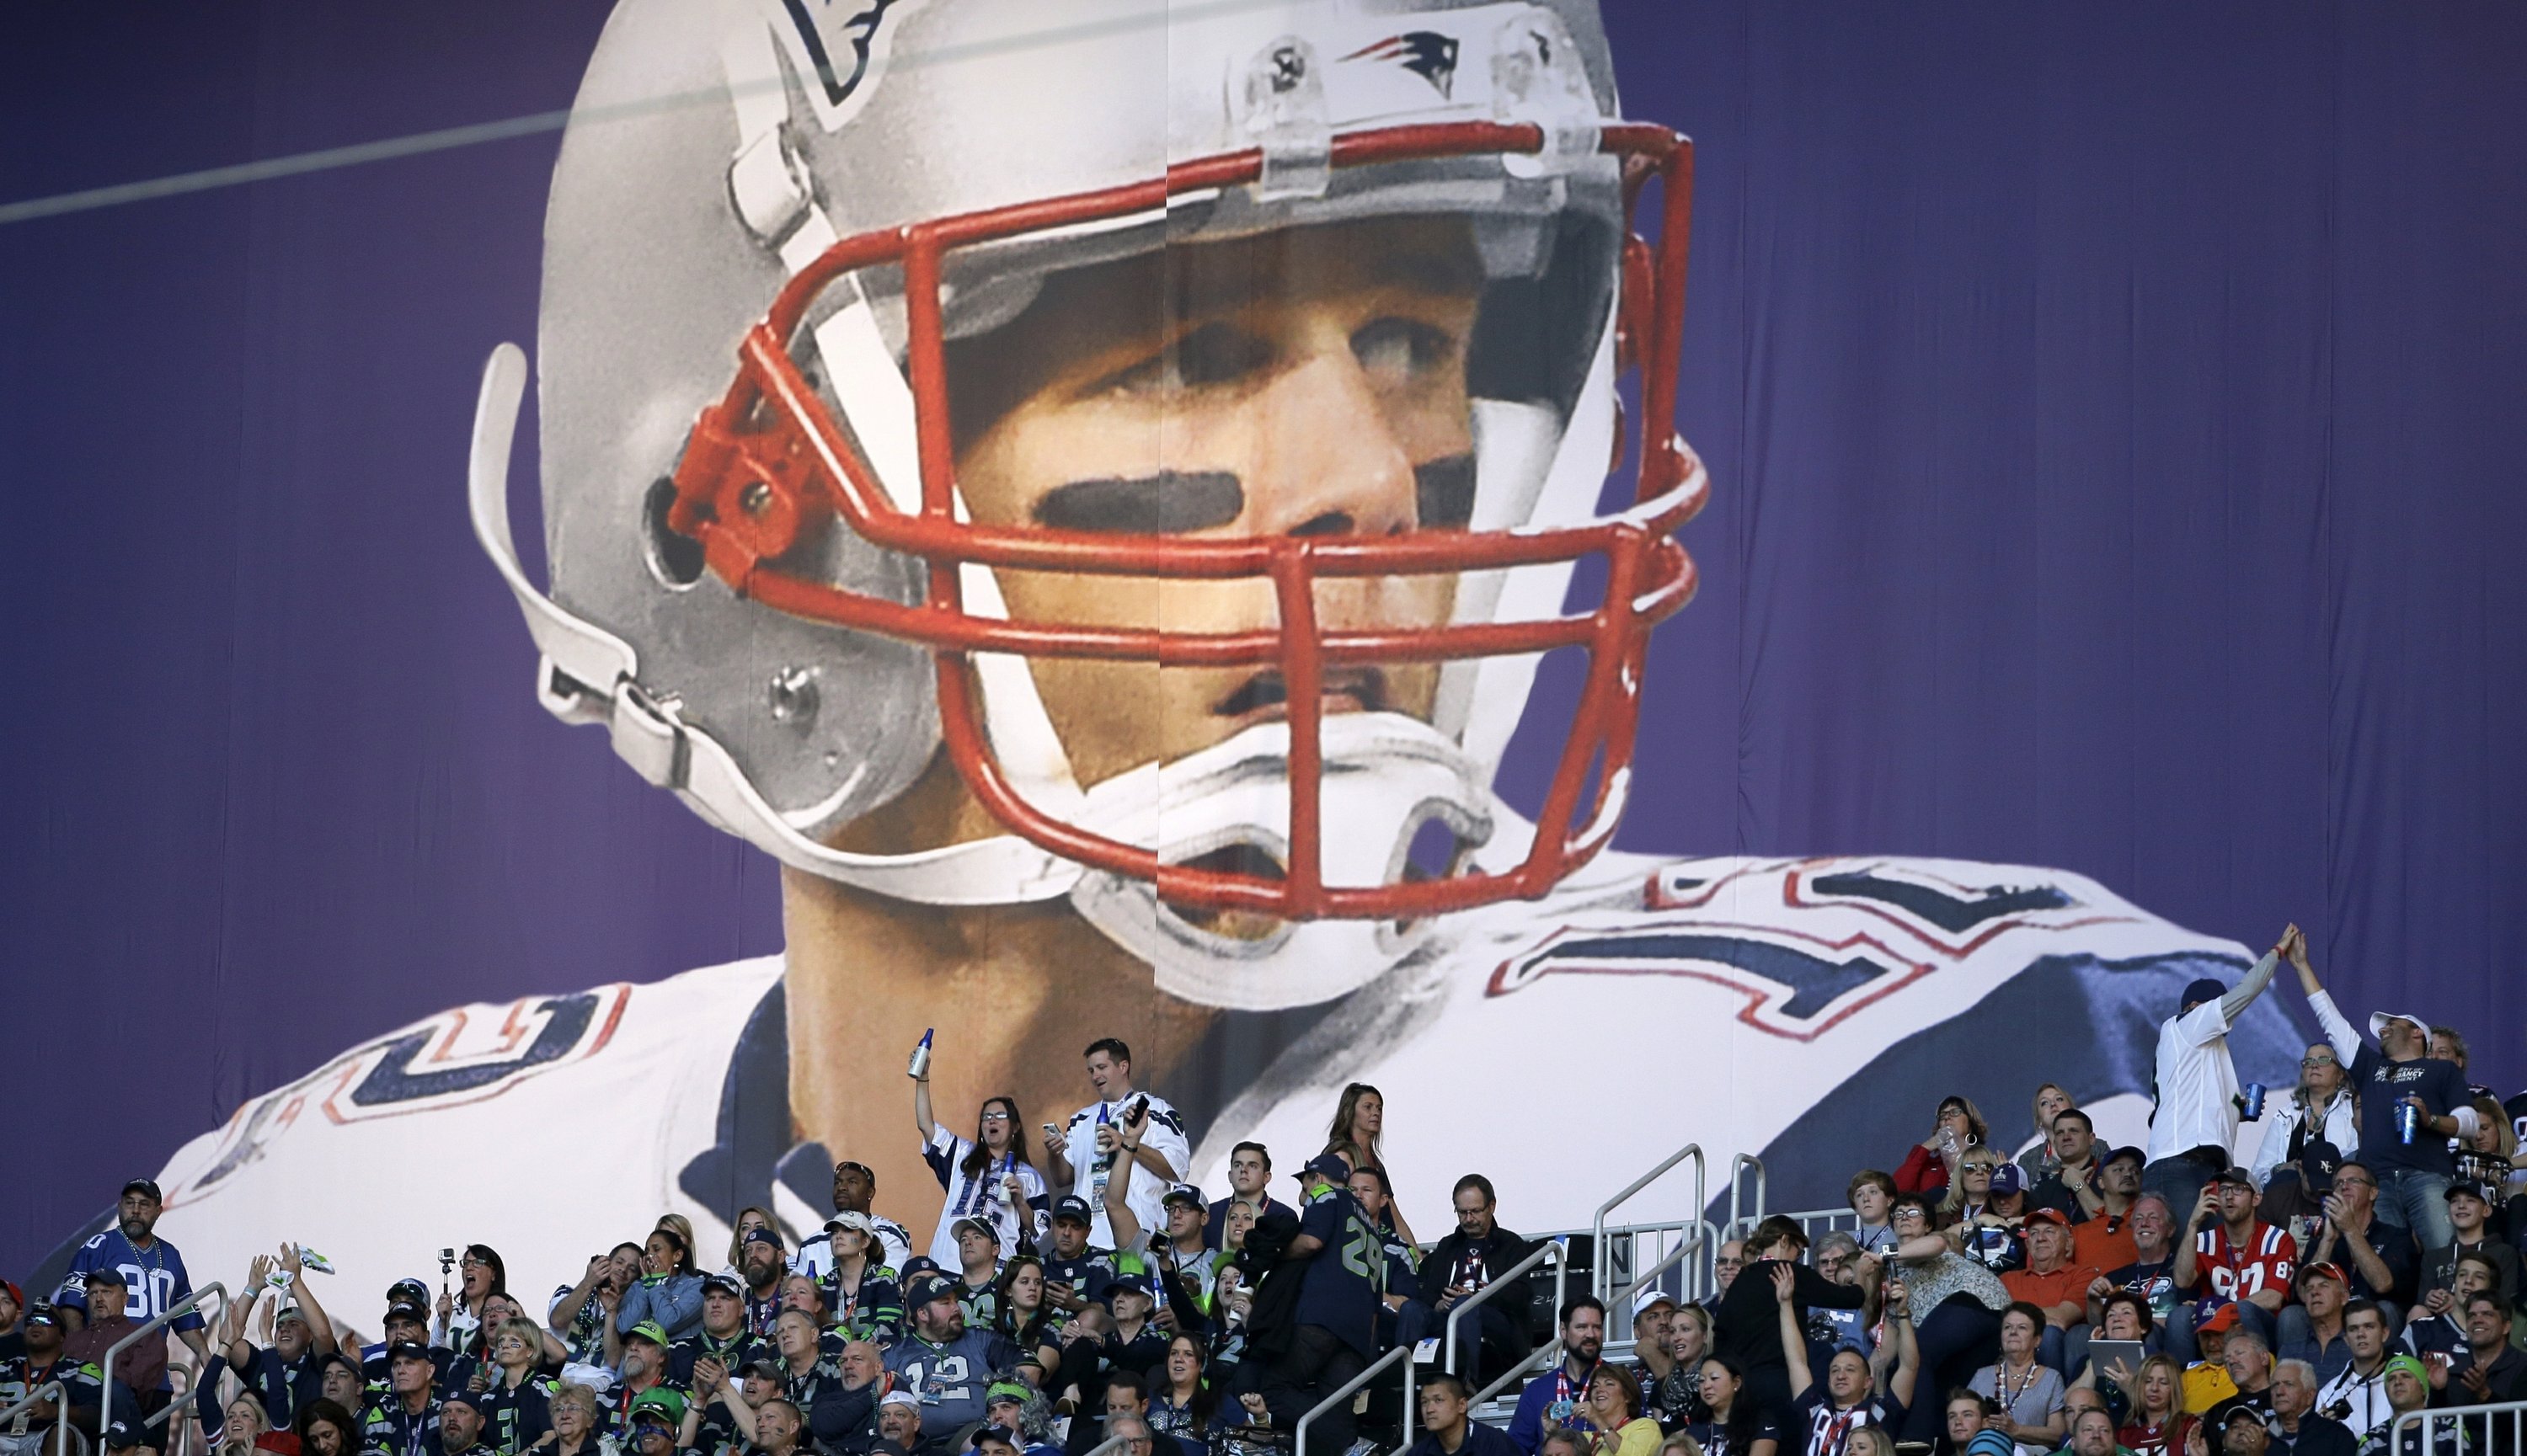 To teammates, Tom Brady stands alone as 